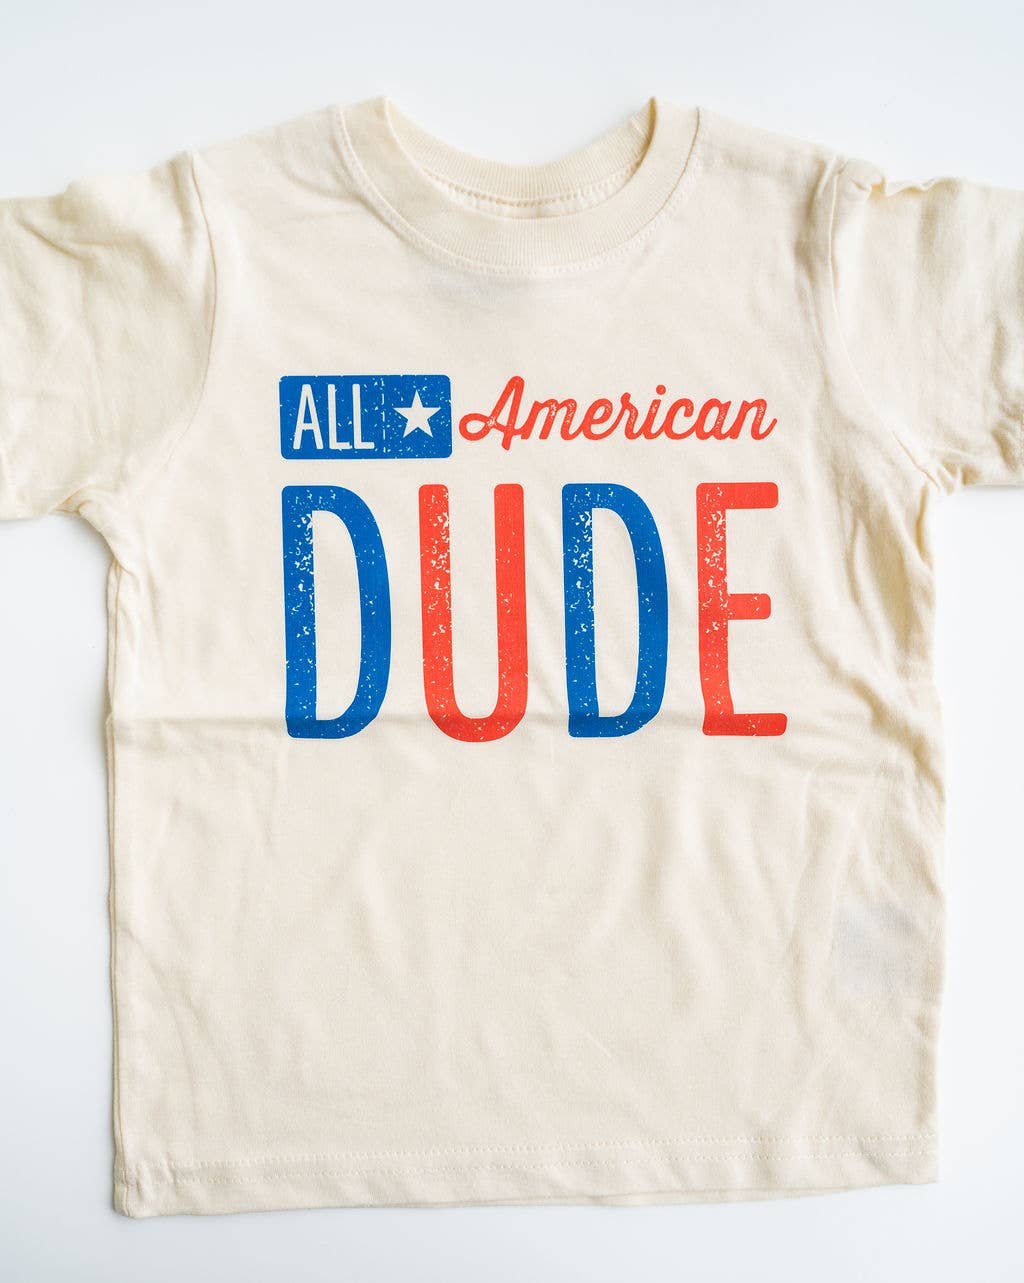 All American Dude Tee